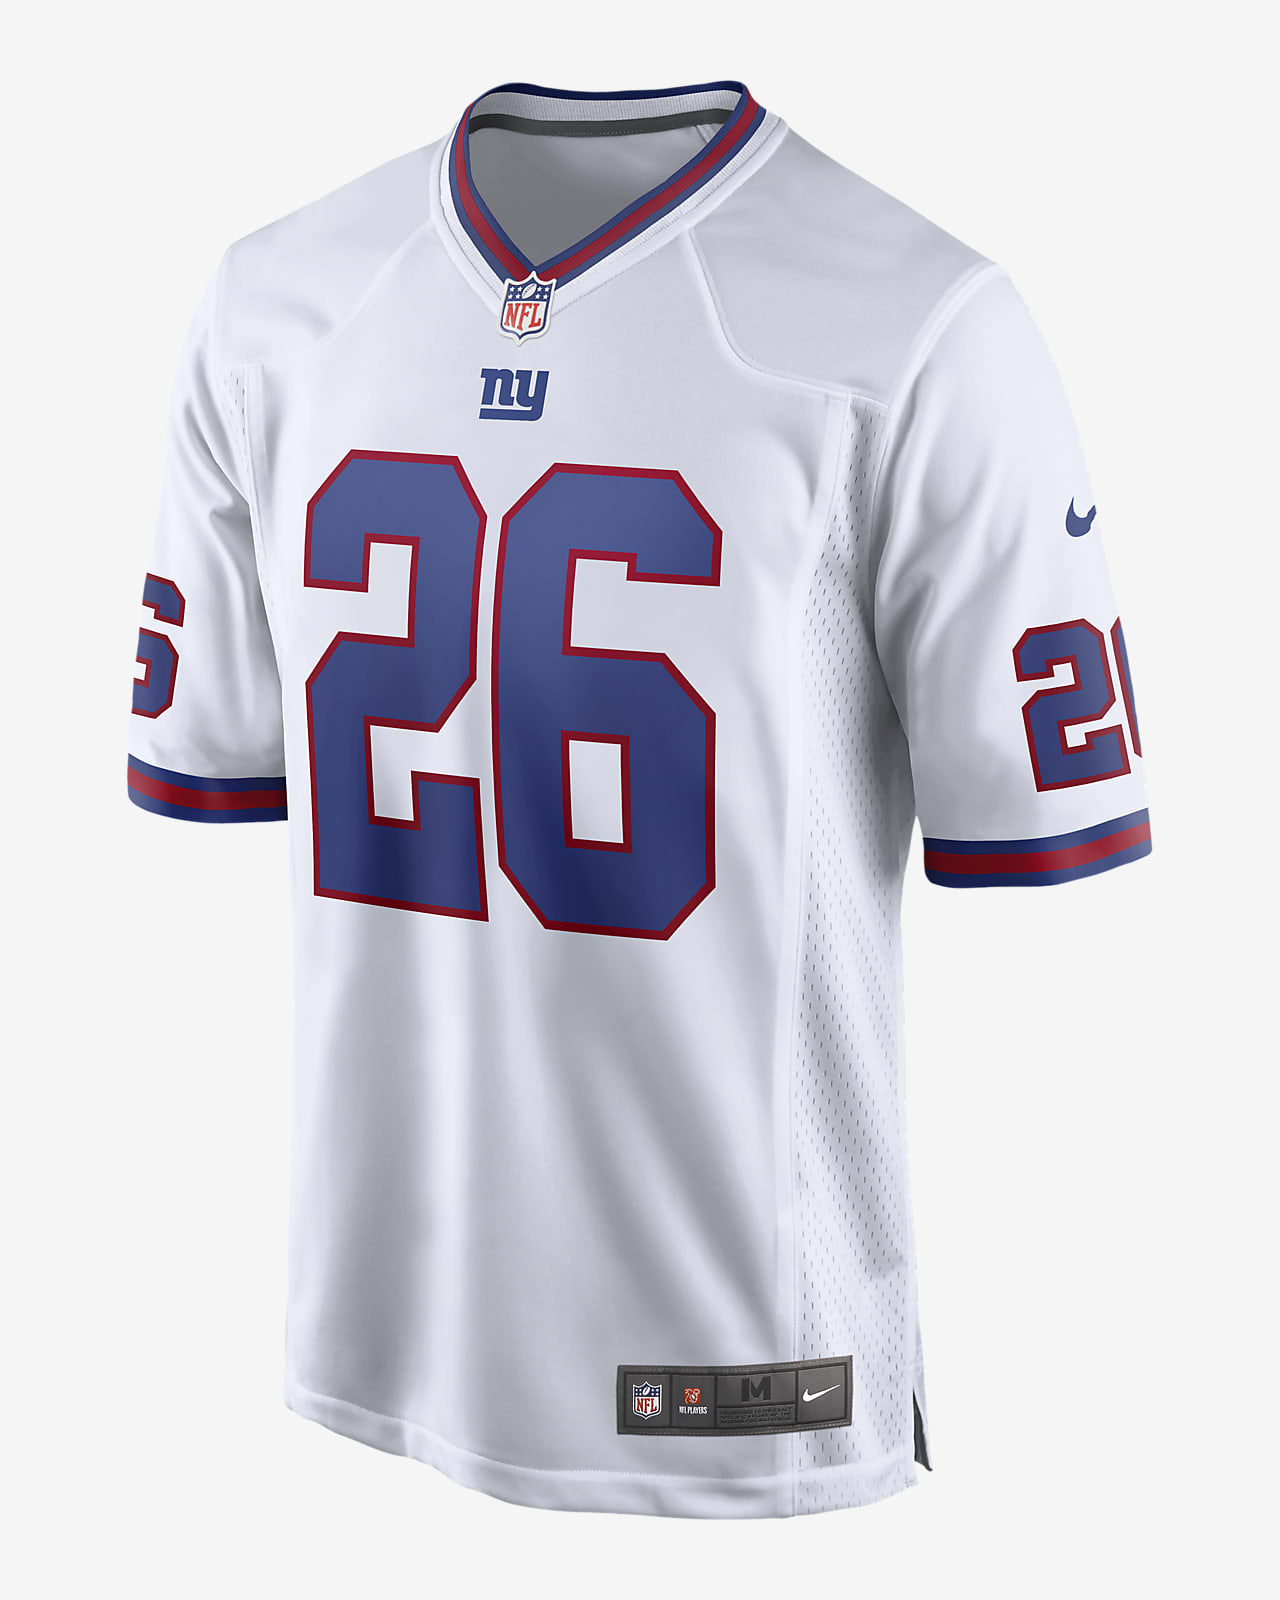 Camiseta oficial de fútbol americano para hombre NFL New York Giants